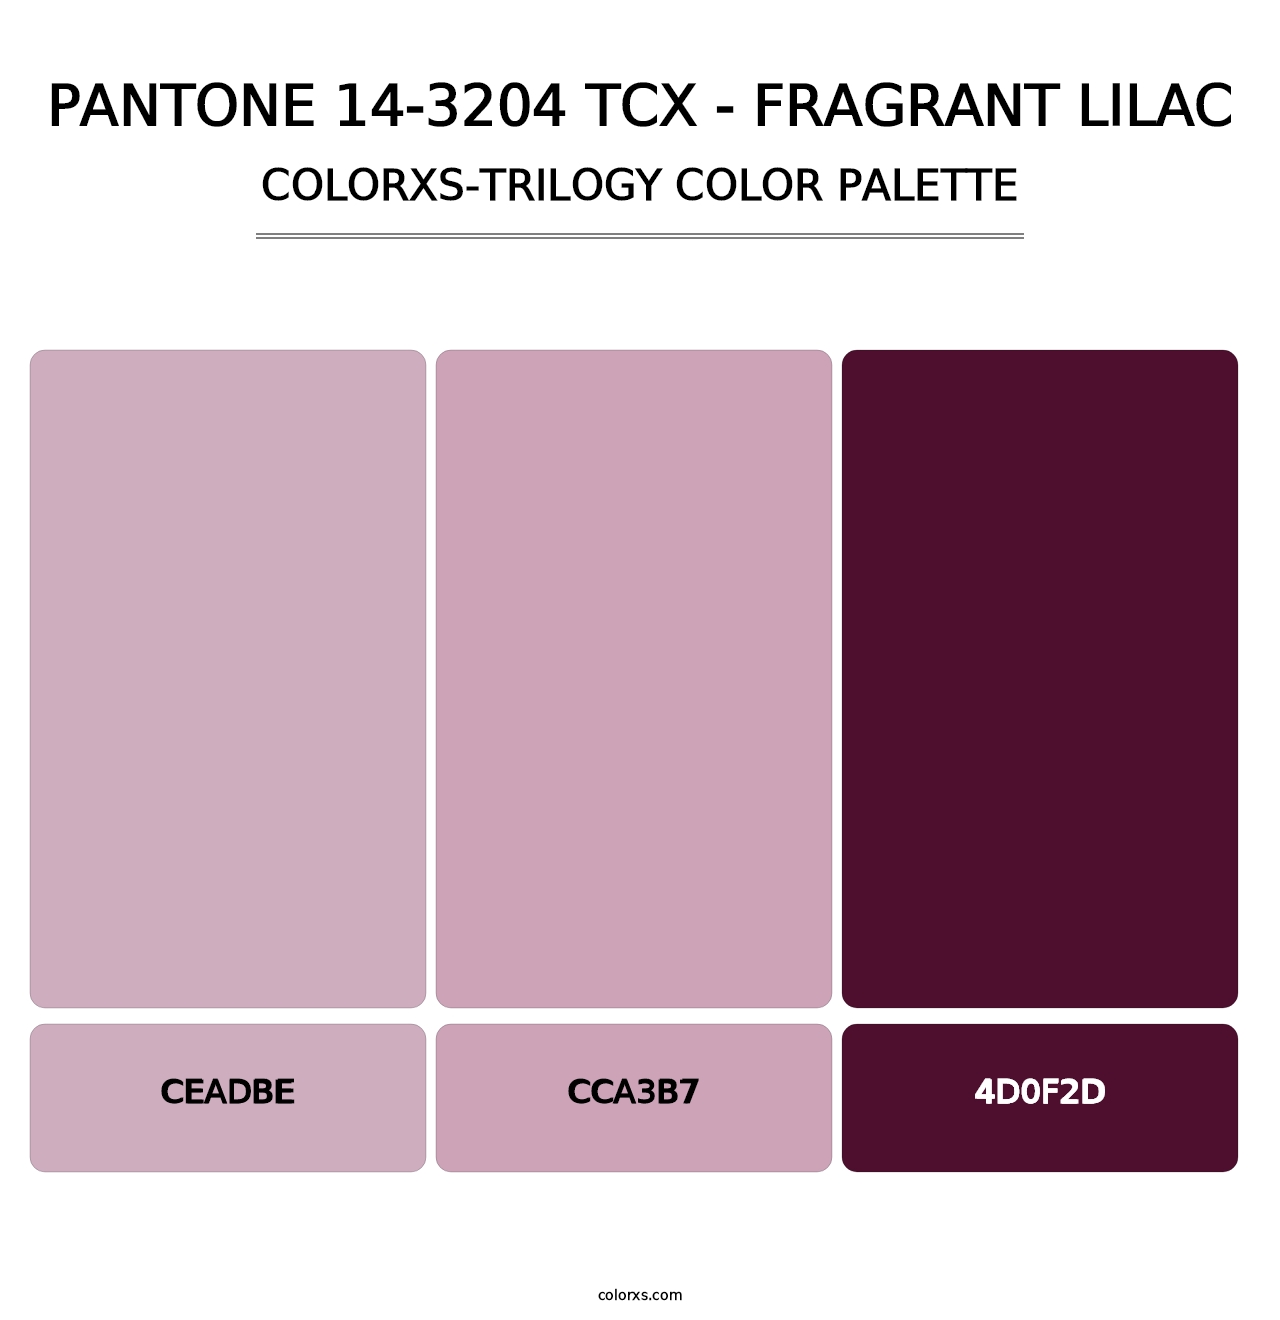 PANTONE 14-3204 TCX - Fragrant Lilac - Colorxs Trilogy Palette